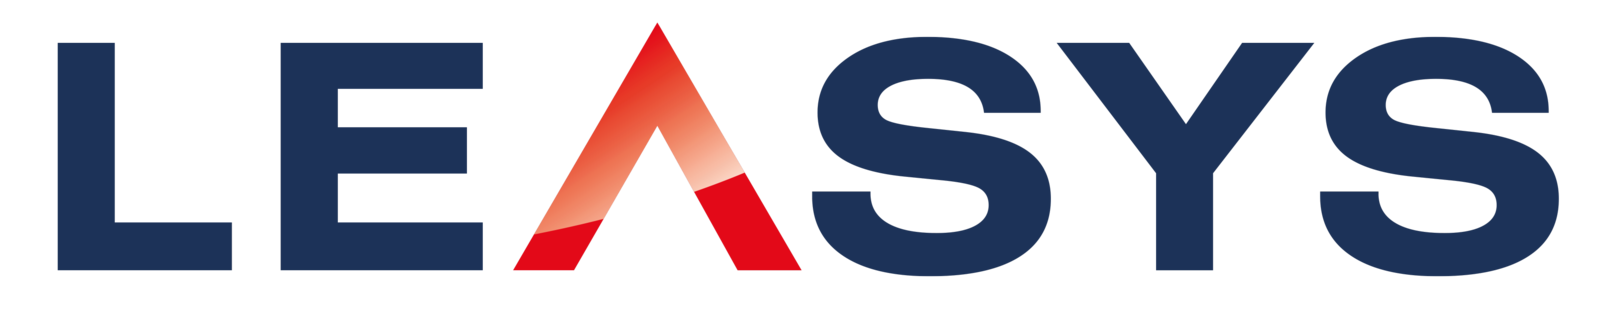 image de Leasys logo